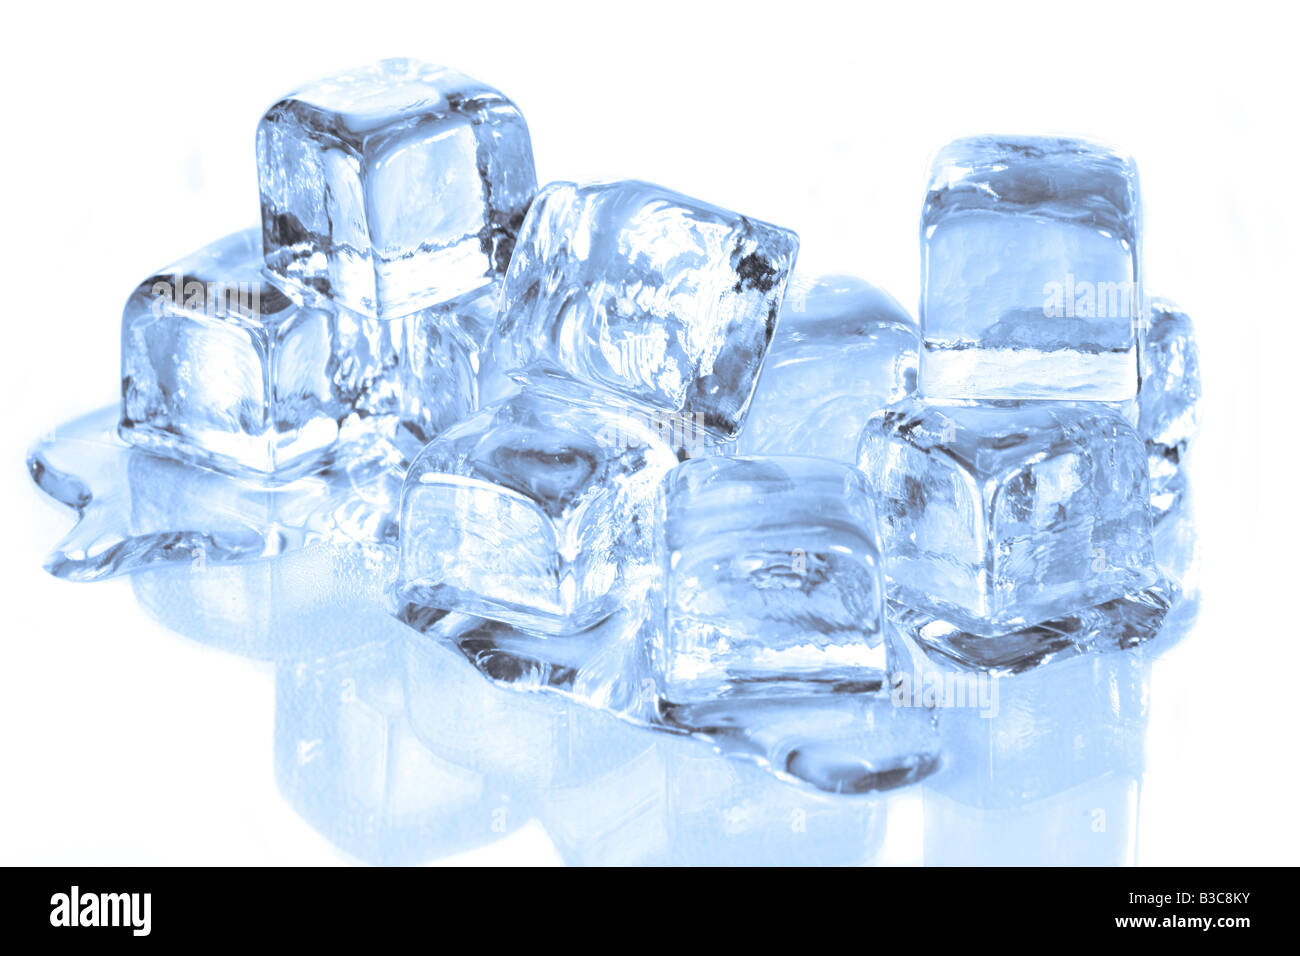 https://c8.alamy.com/comp/B3C8KY/ice-cubes-melting-on-a-reflective-surface-B3C8KY.jpg